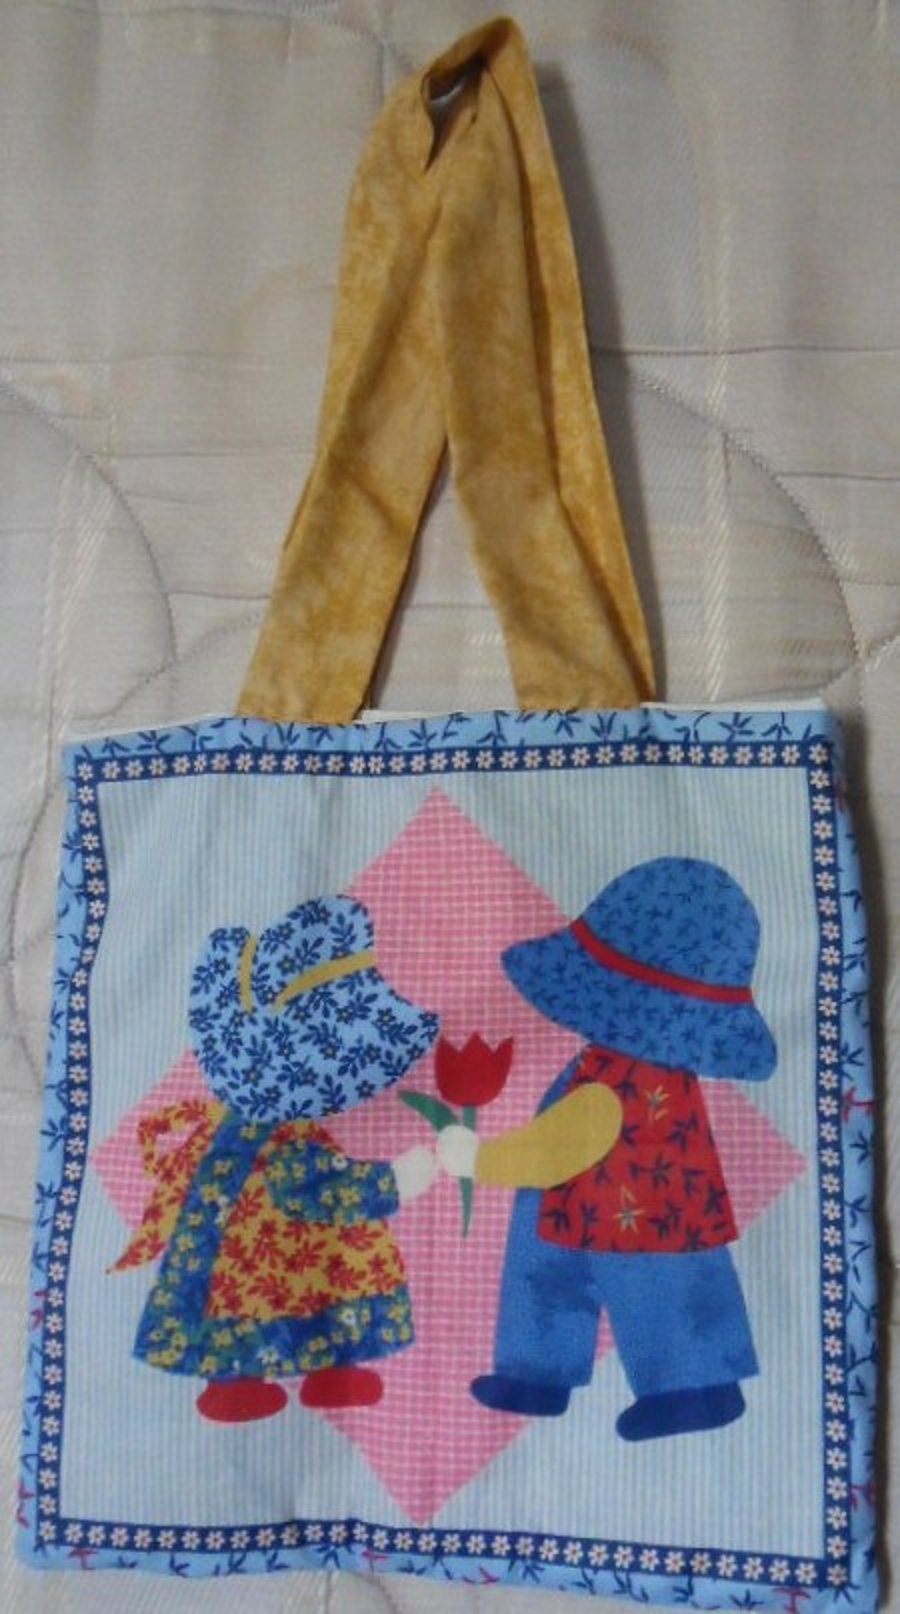 Homemade tote bag. Sunbonnet Sue and Sam design. Short handles